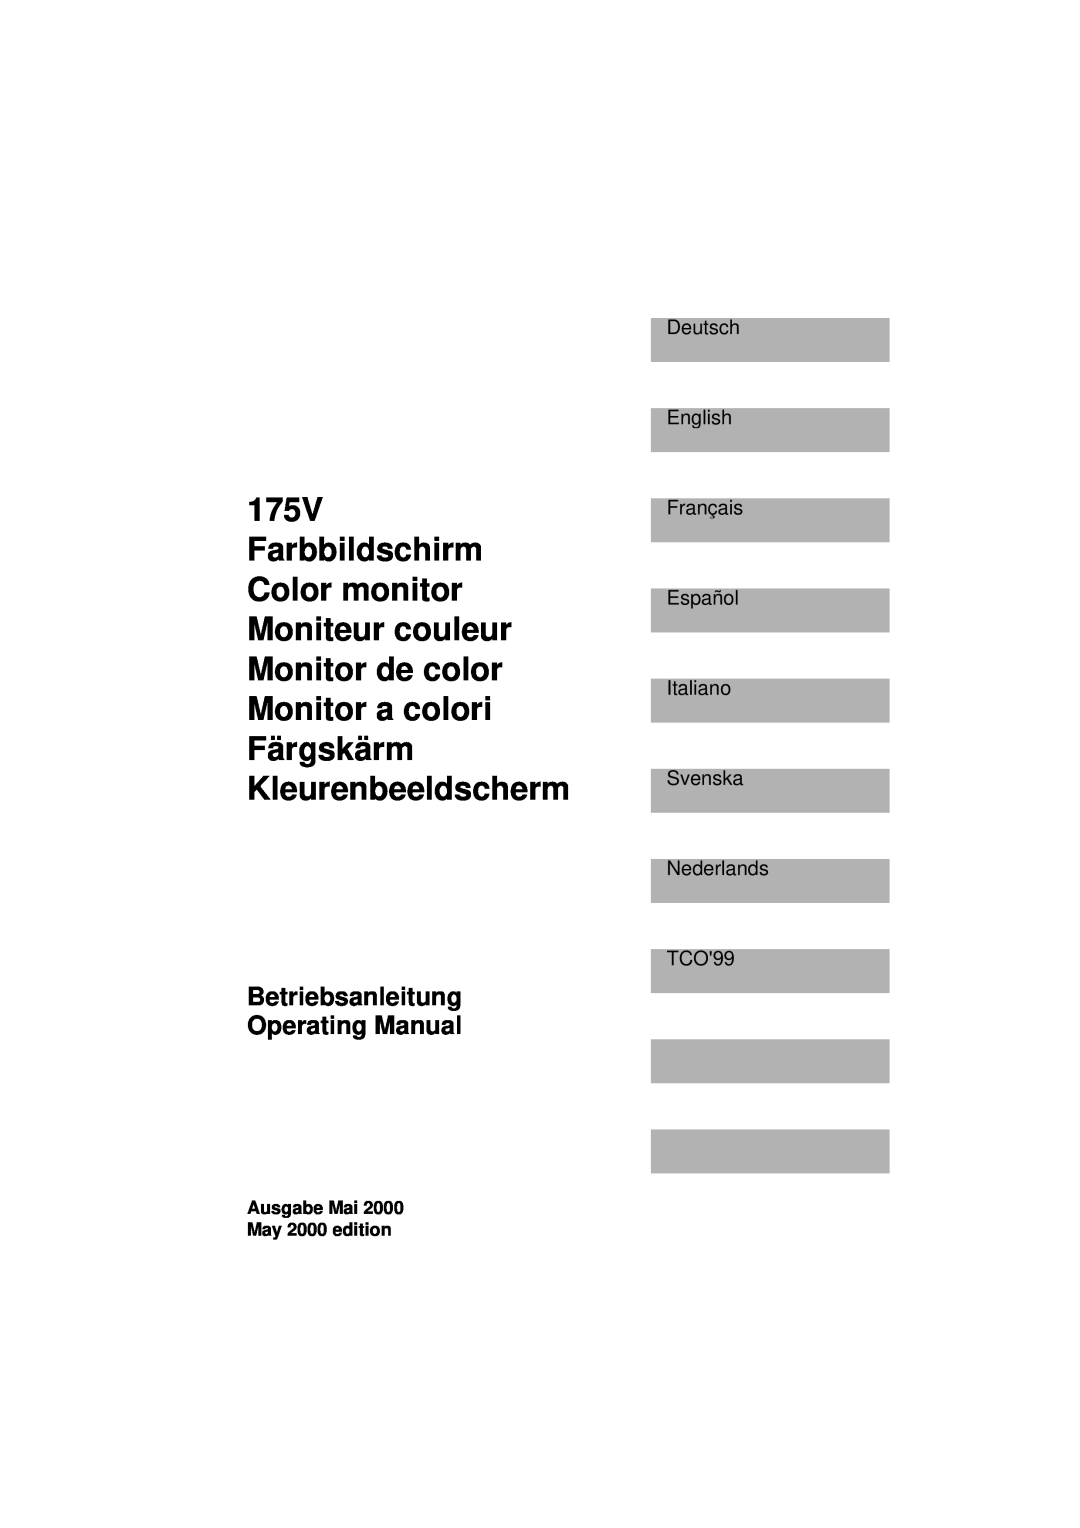 Siemens 175V manual Betriebsanleitung Operating Manual, Ausgabe Mai 2000 May 2000 edition 